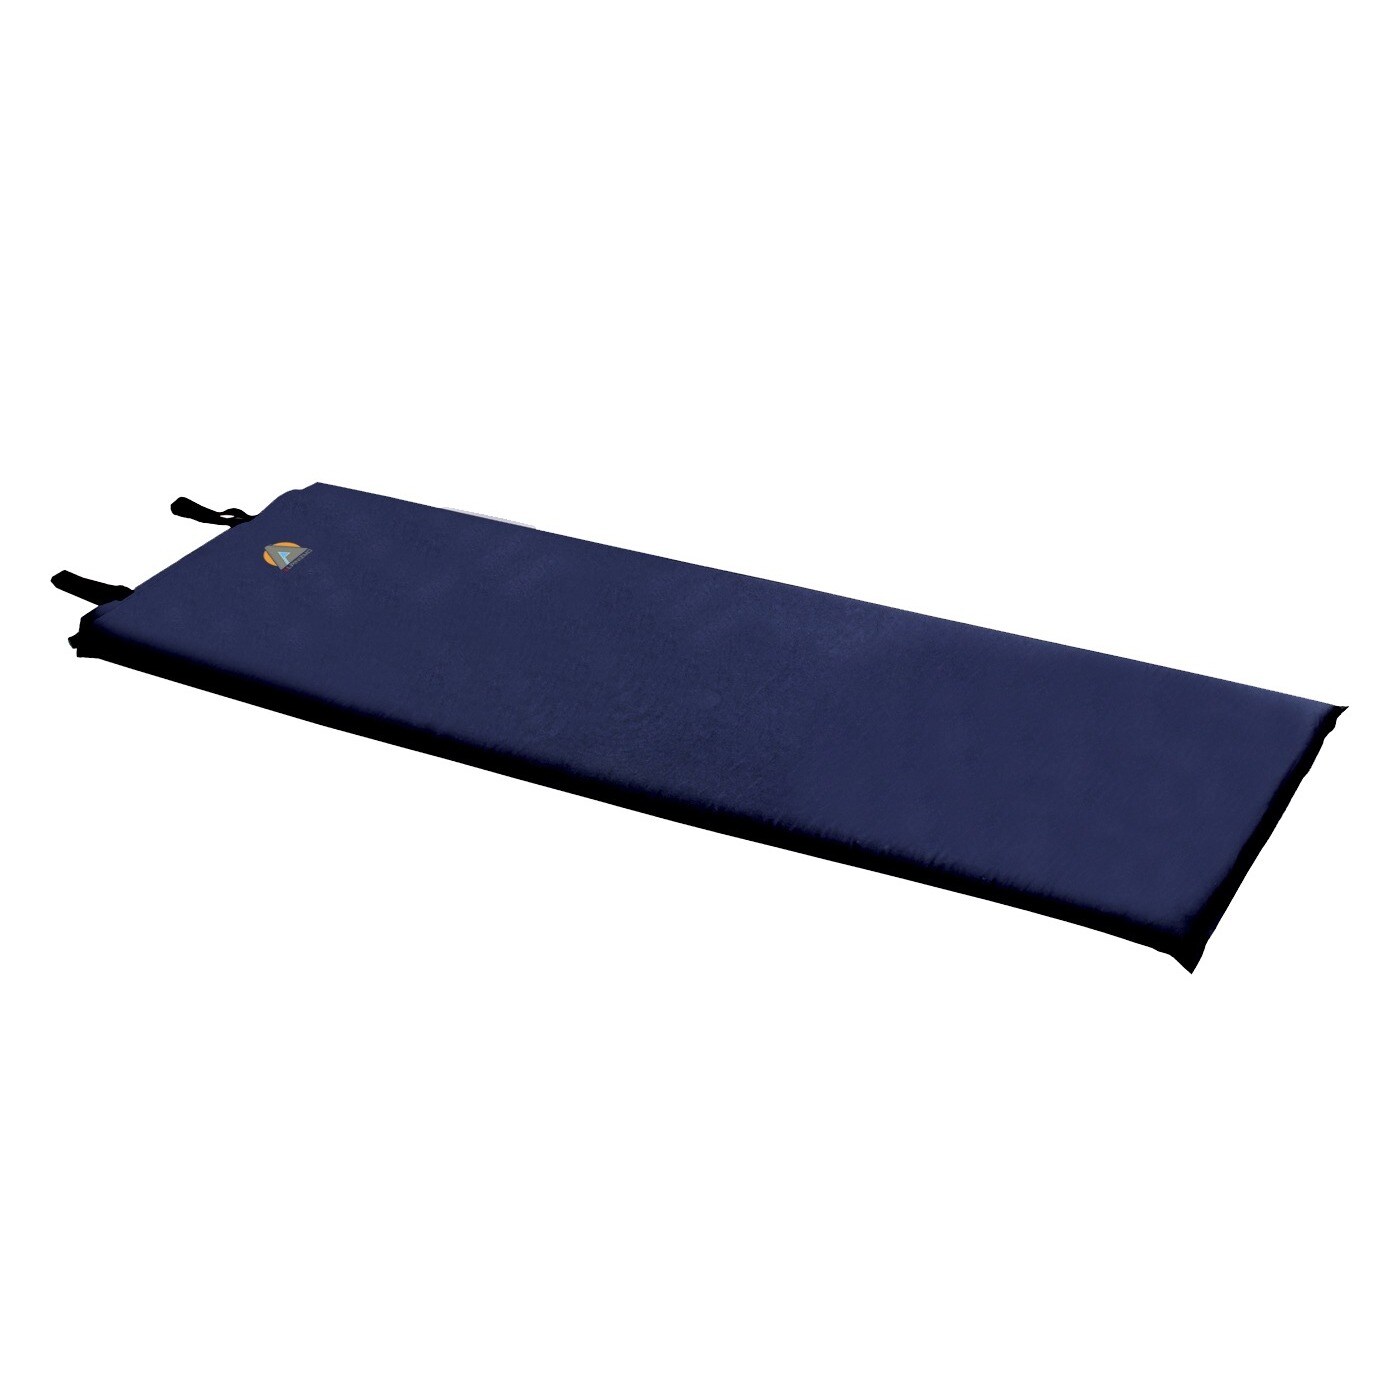 4 inch sleeping pad